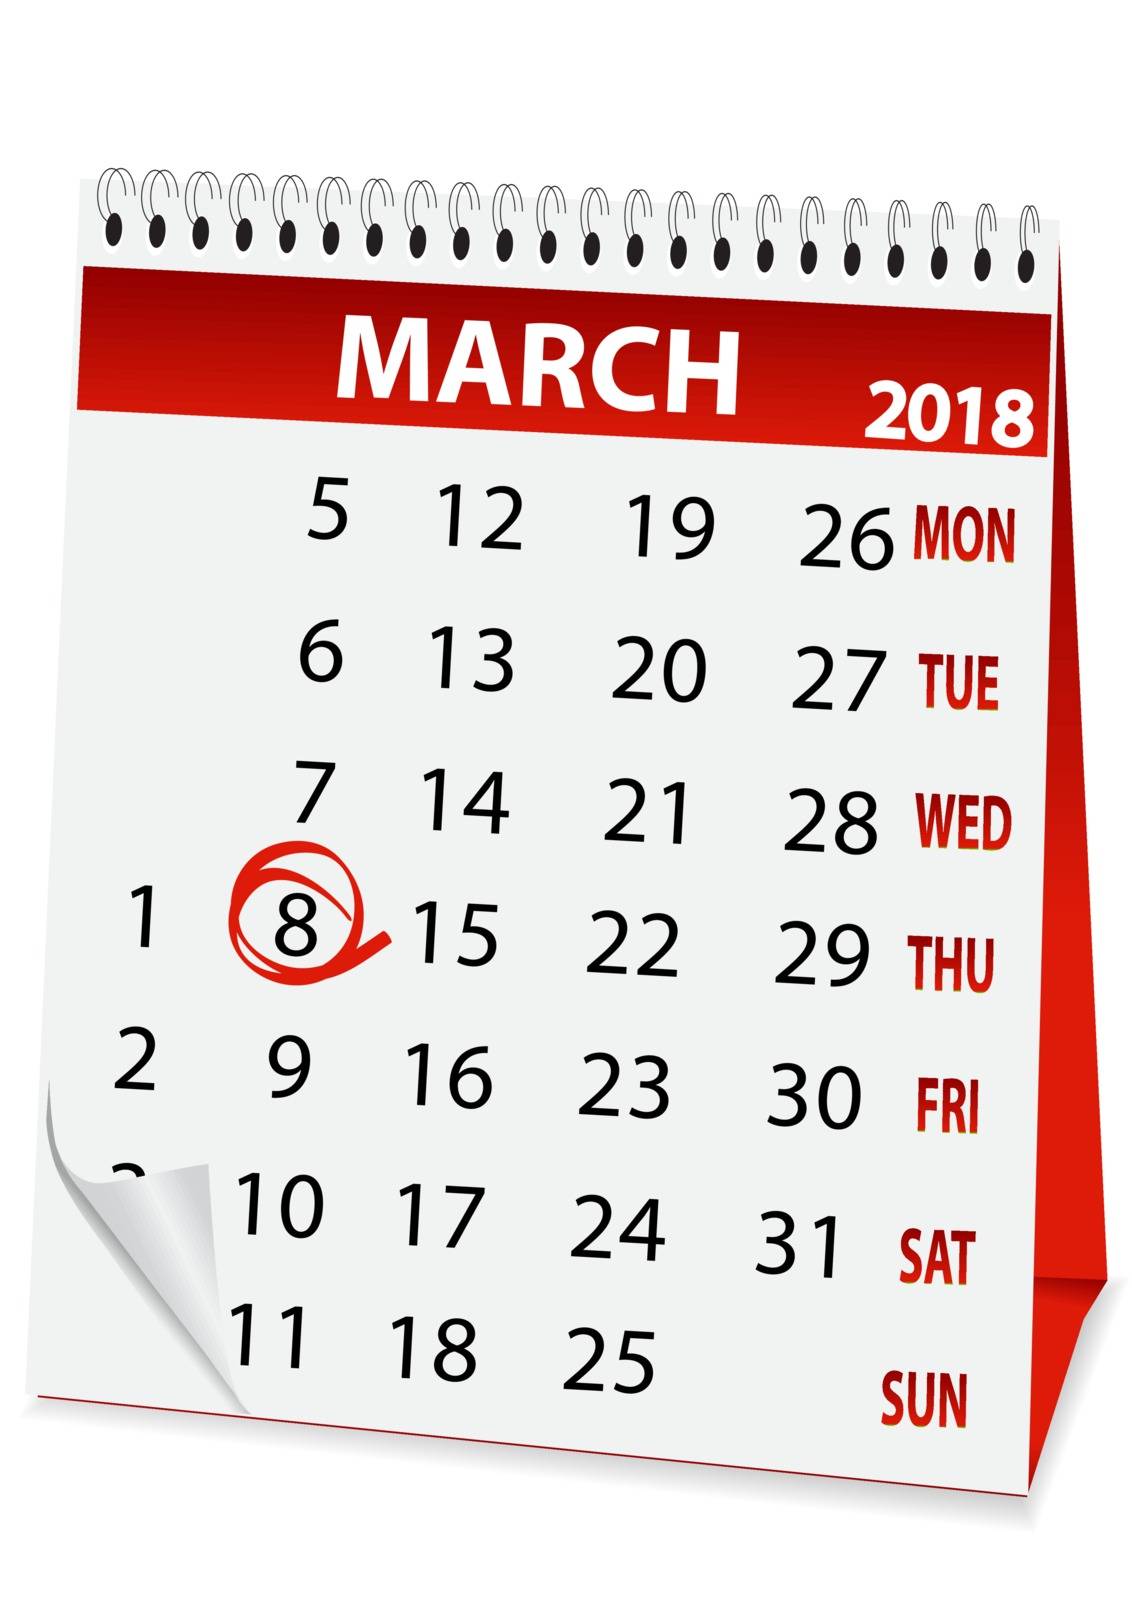 holiday calendar in 8 March 2018 by rodakm